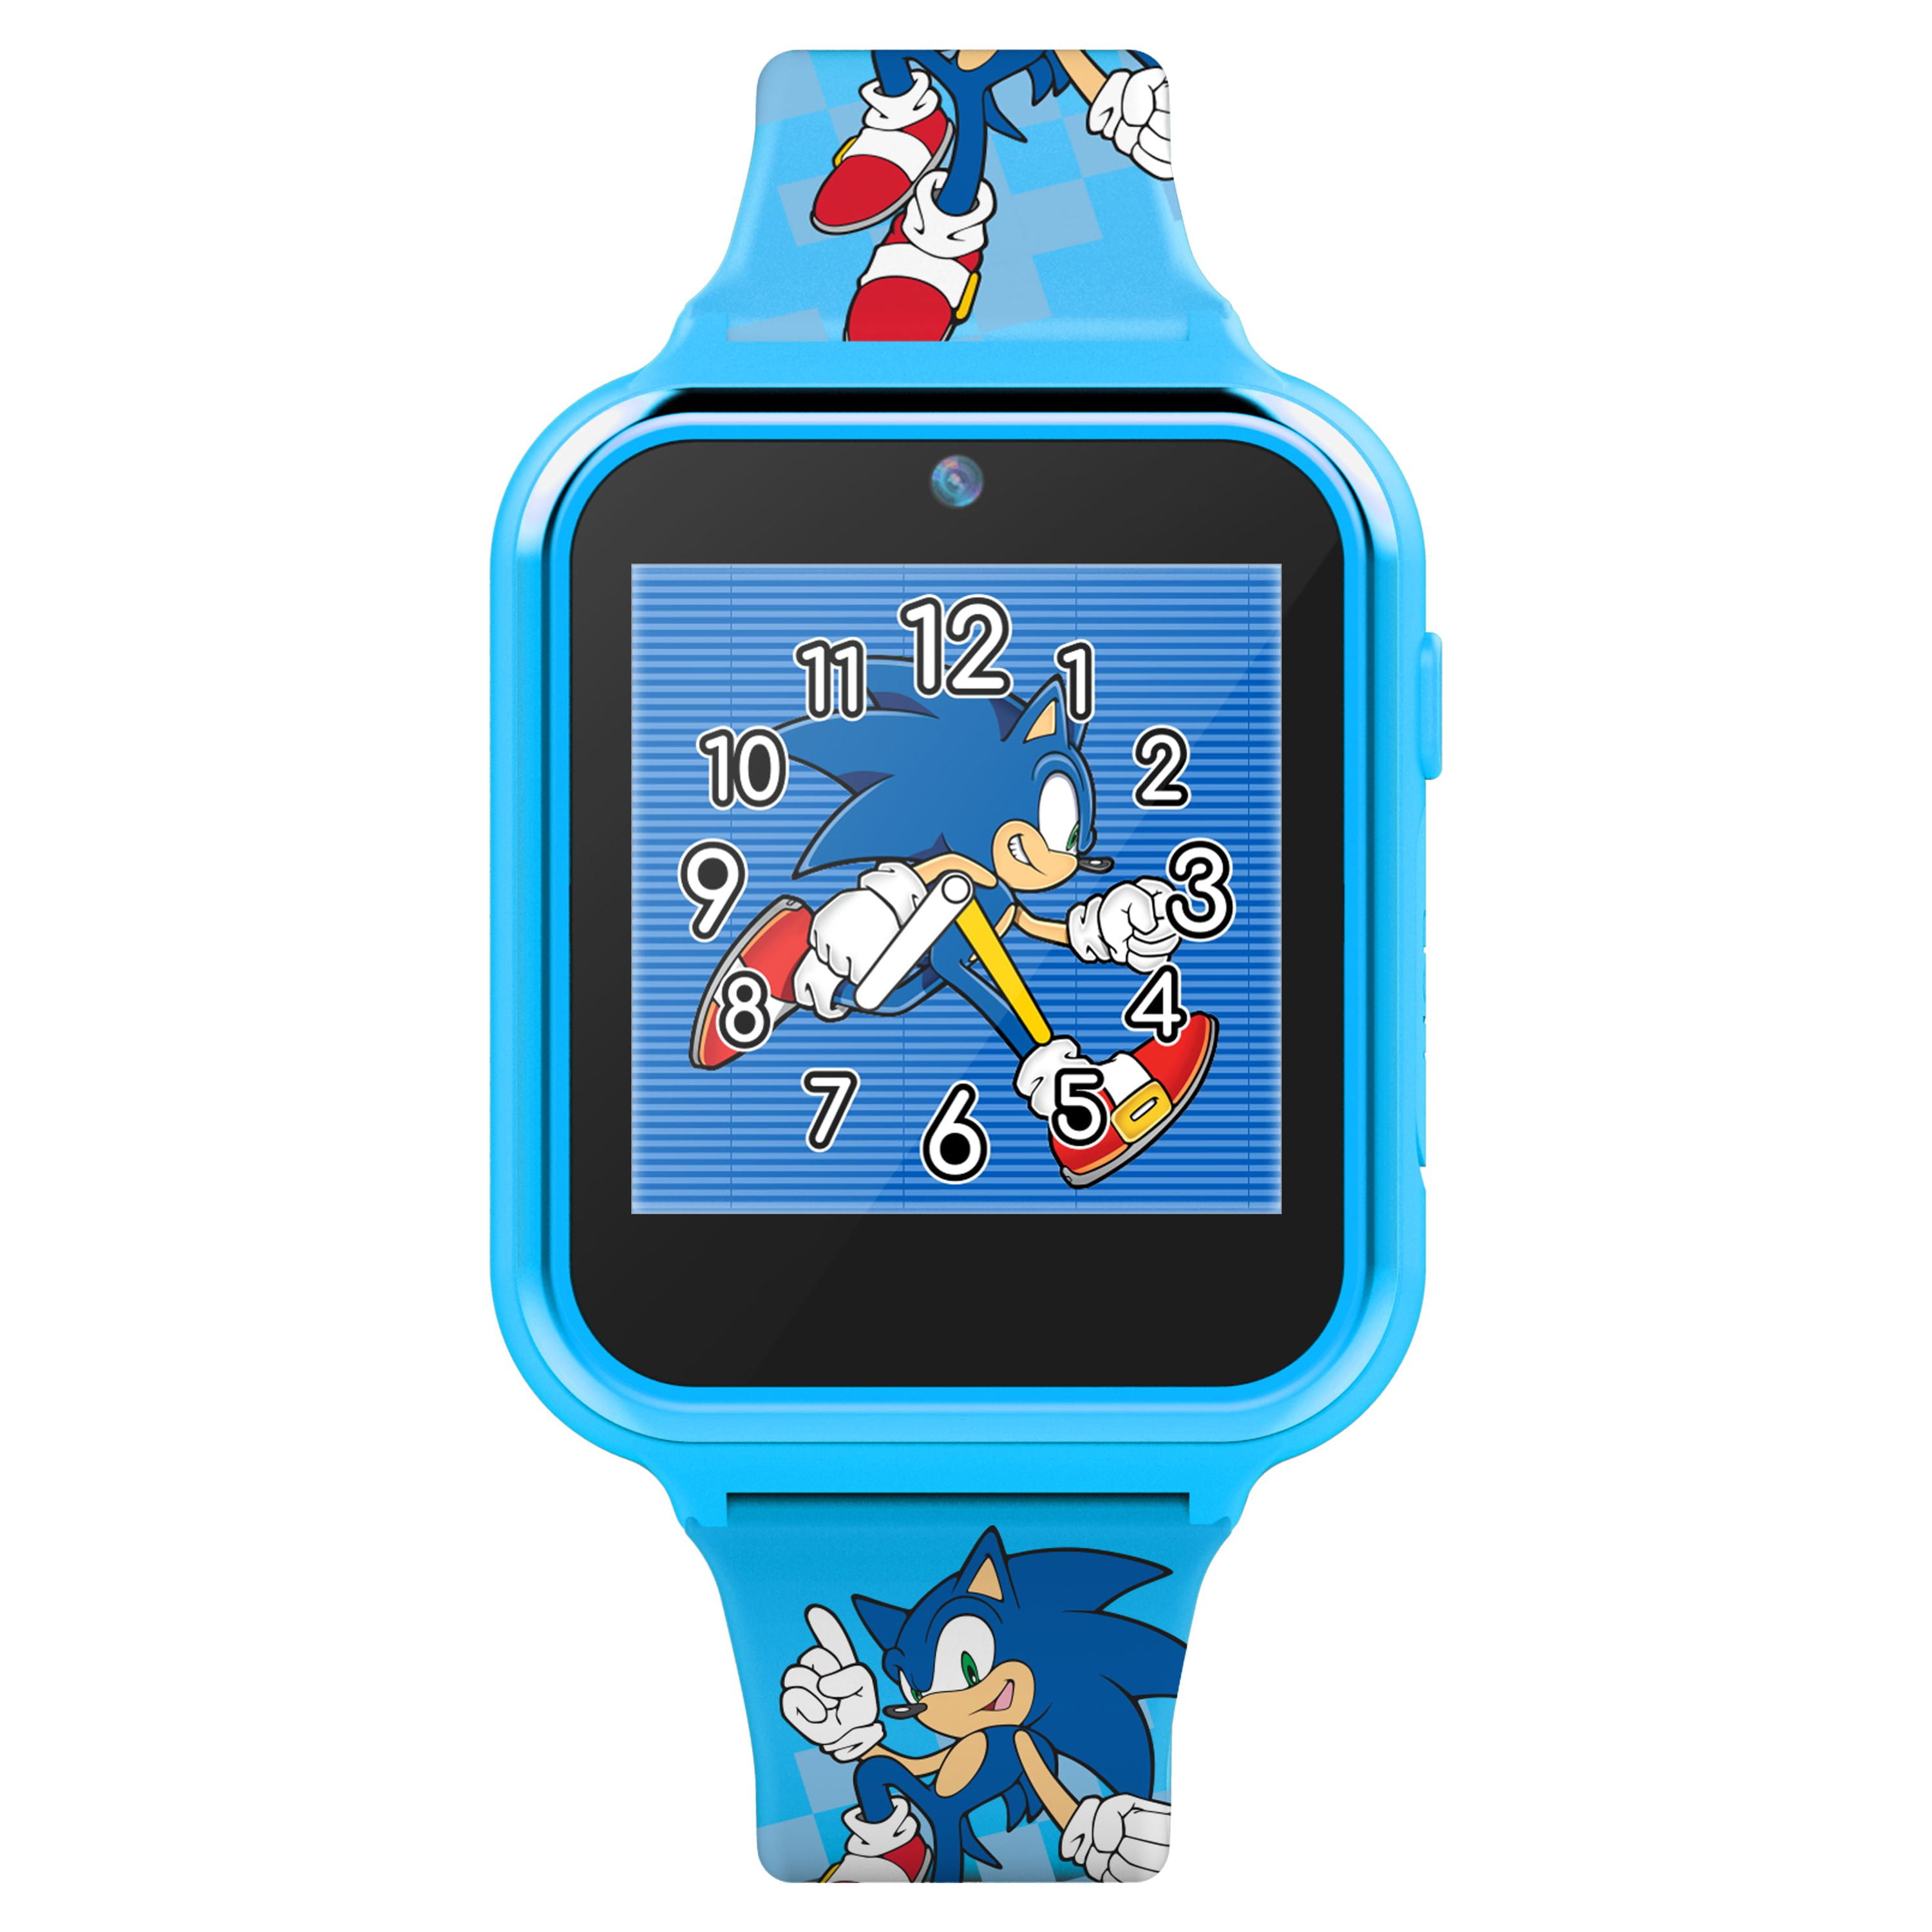 Sonic watch. Часы детские Sonic. Часы Sonic Quartz. Часы Соника часы Соника. Часы Соника бум.